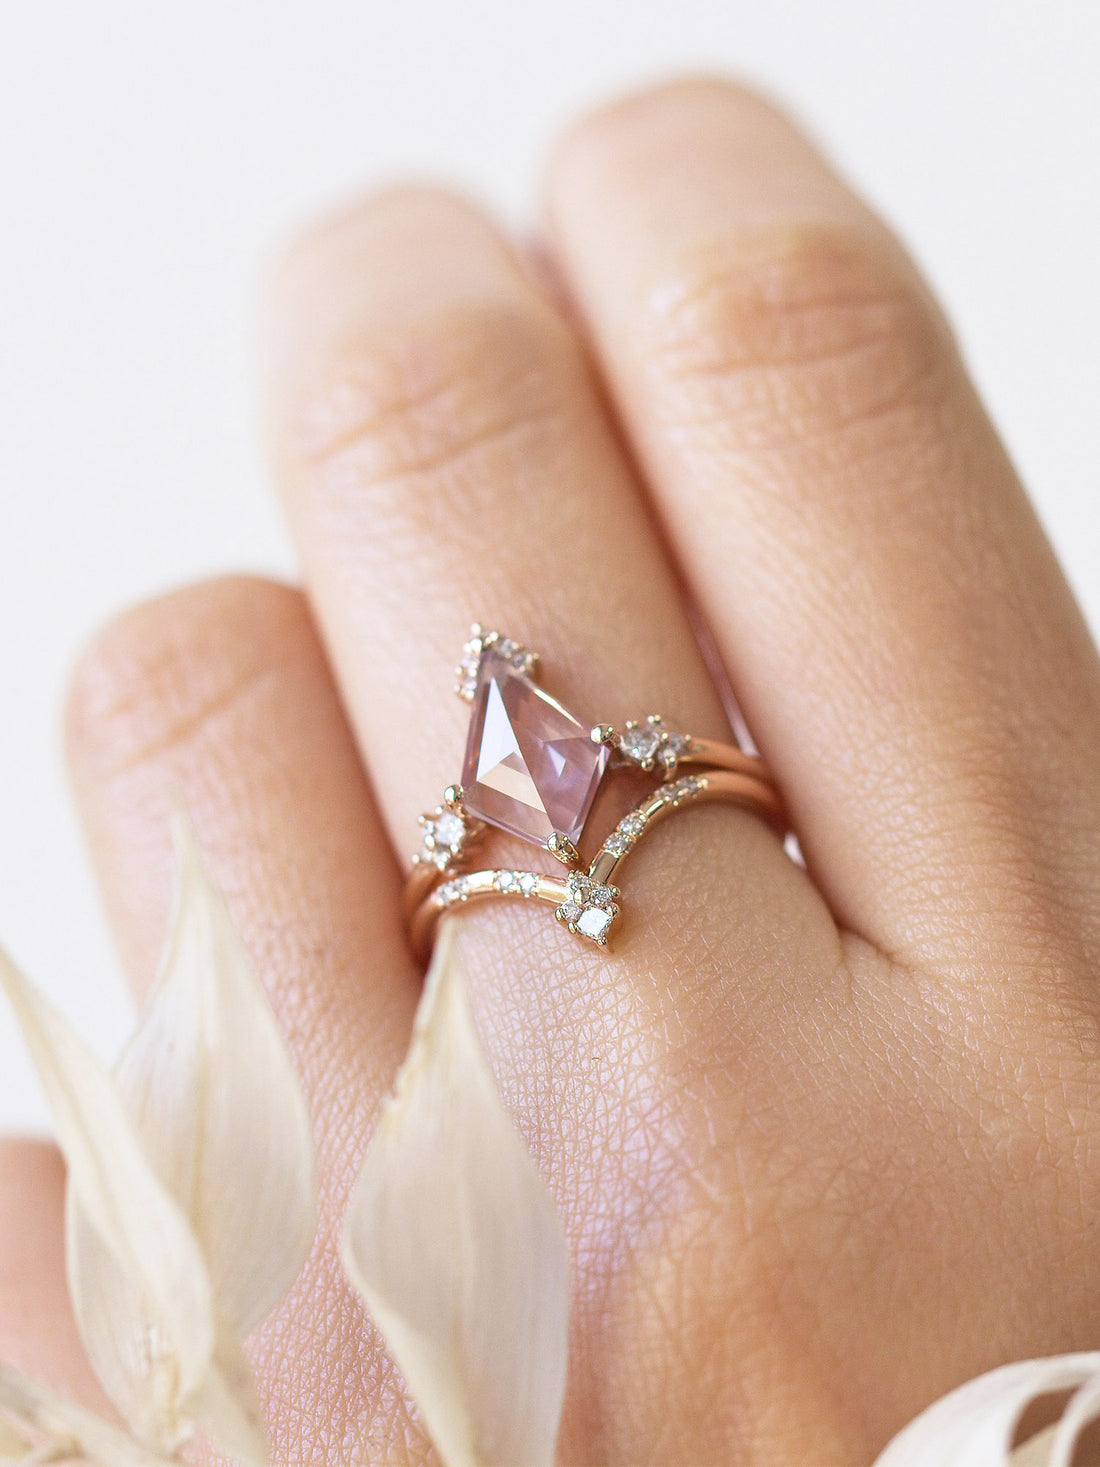 salt and pepper diamond engagement ring sapphire proposal ring keira kite ring diamond 5